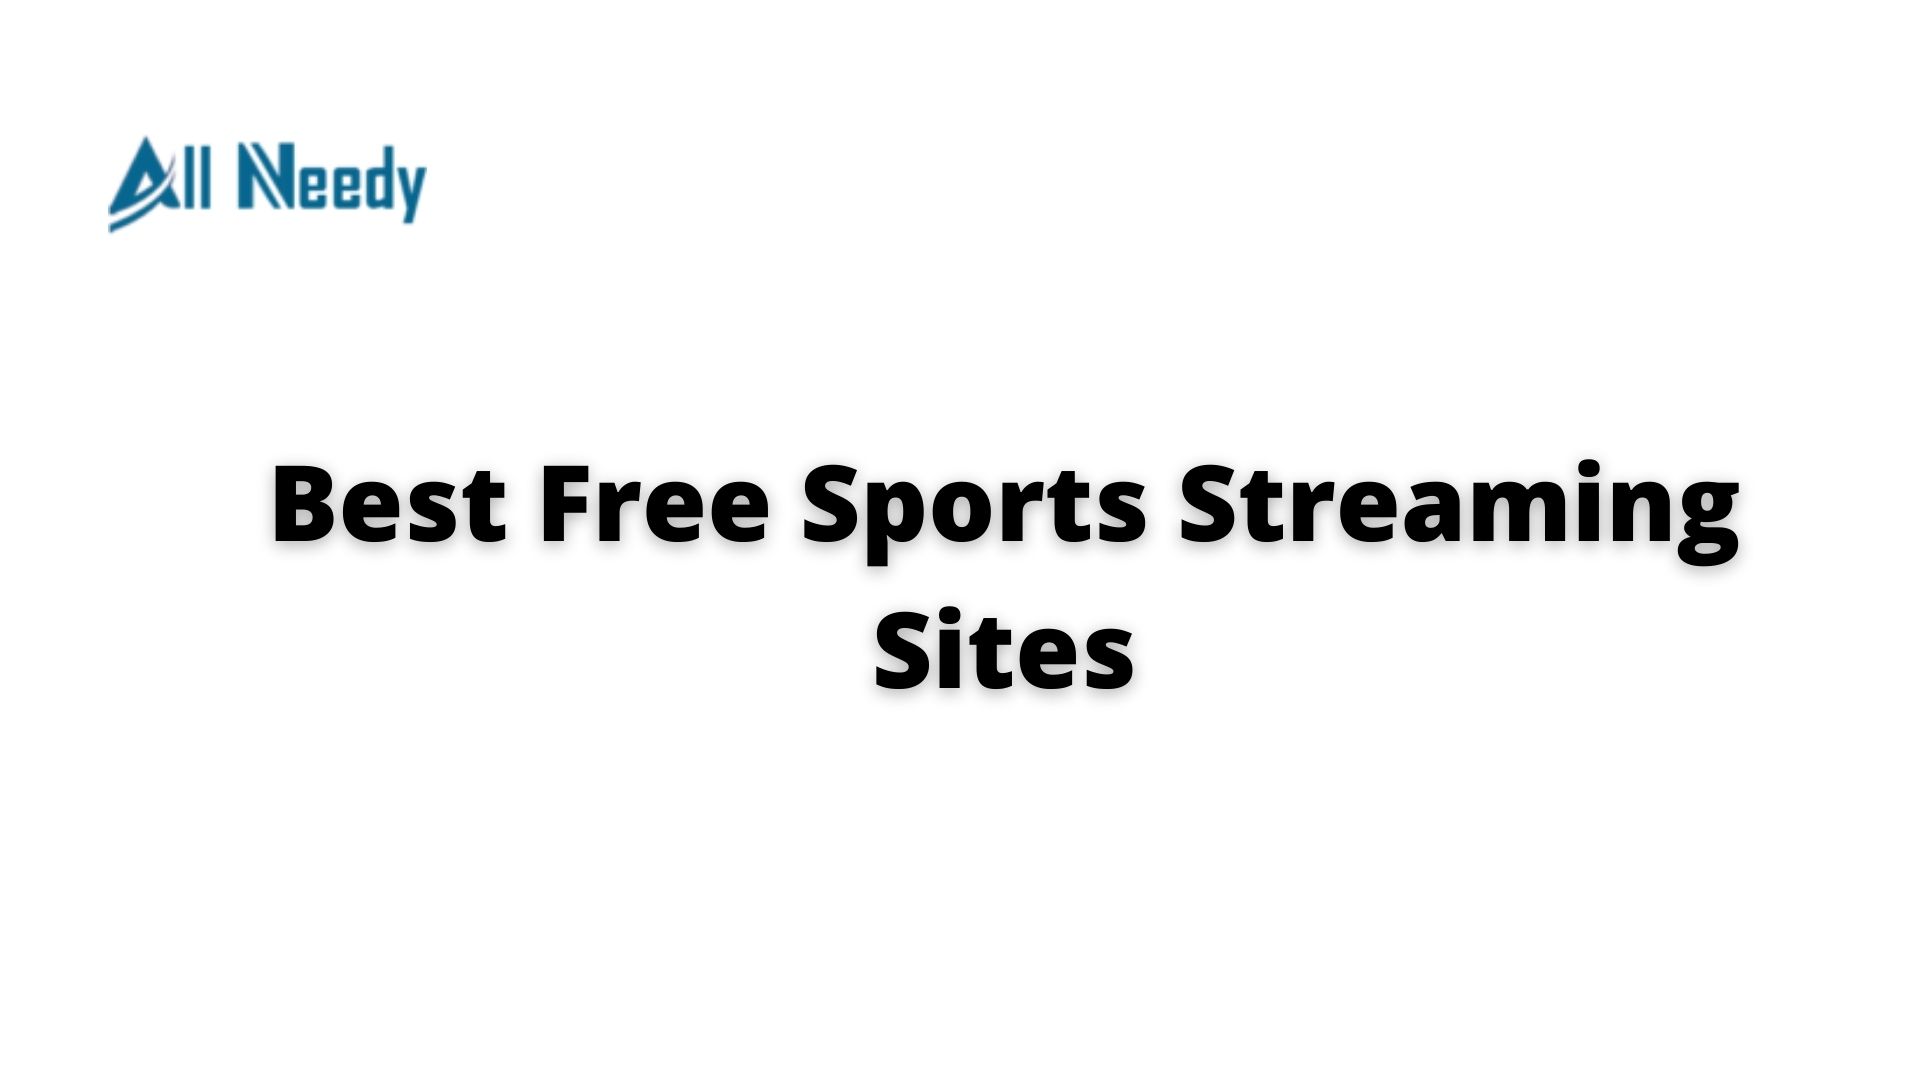 public/uploads/2022/01/Best-Free-Sports-Streaming-Sites.jpg